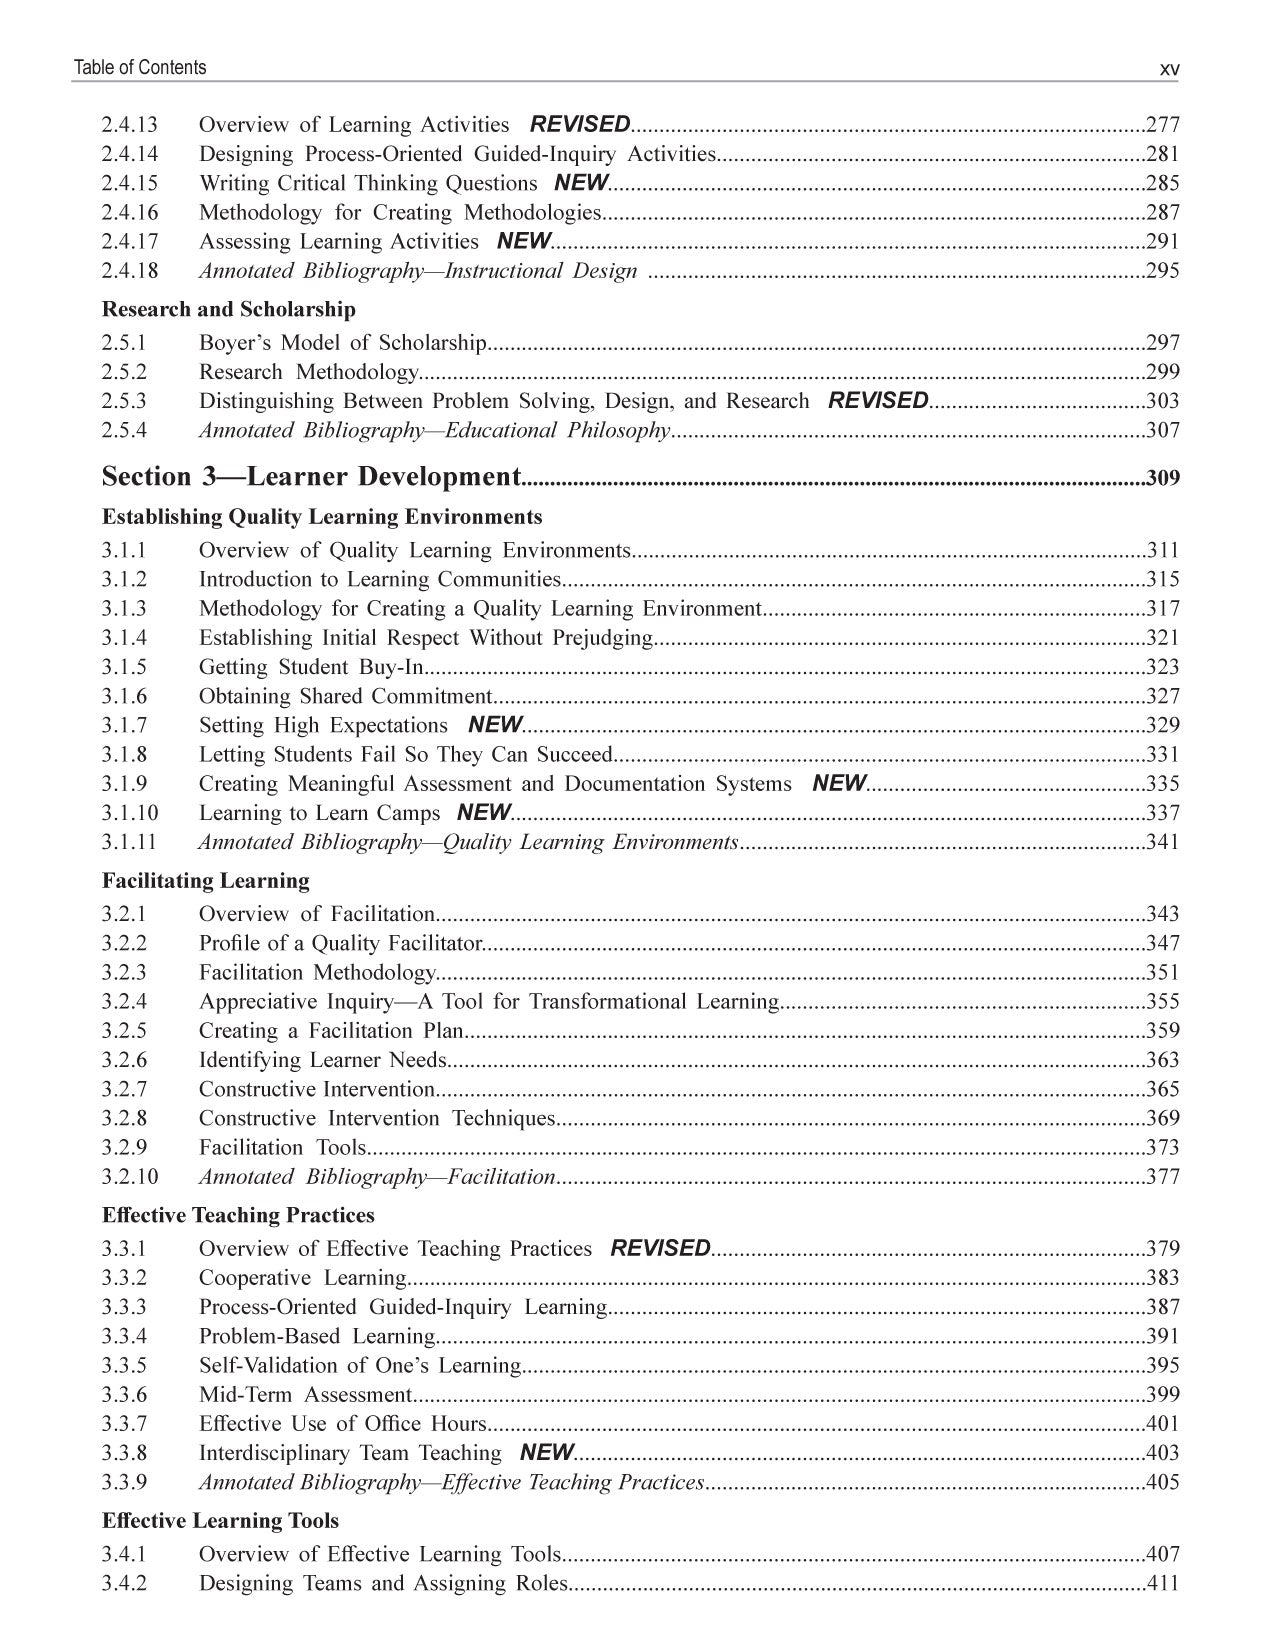 Faculty Guidebook, 4th Edition